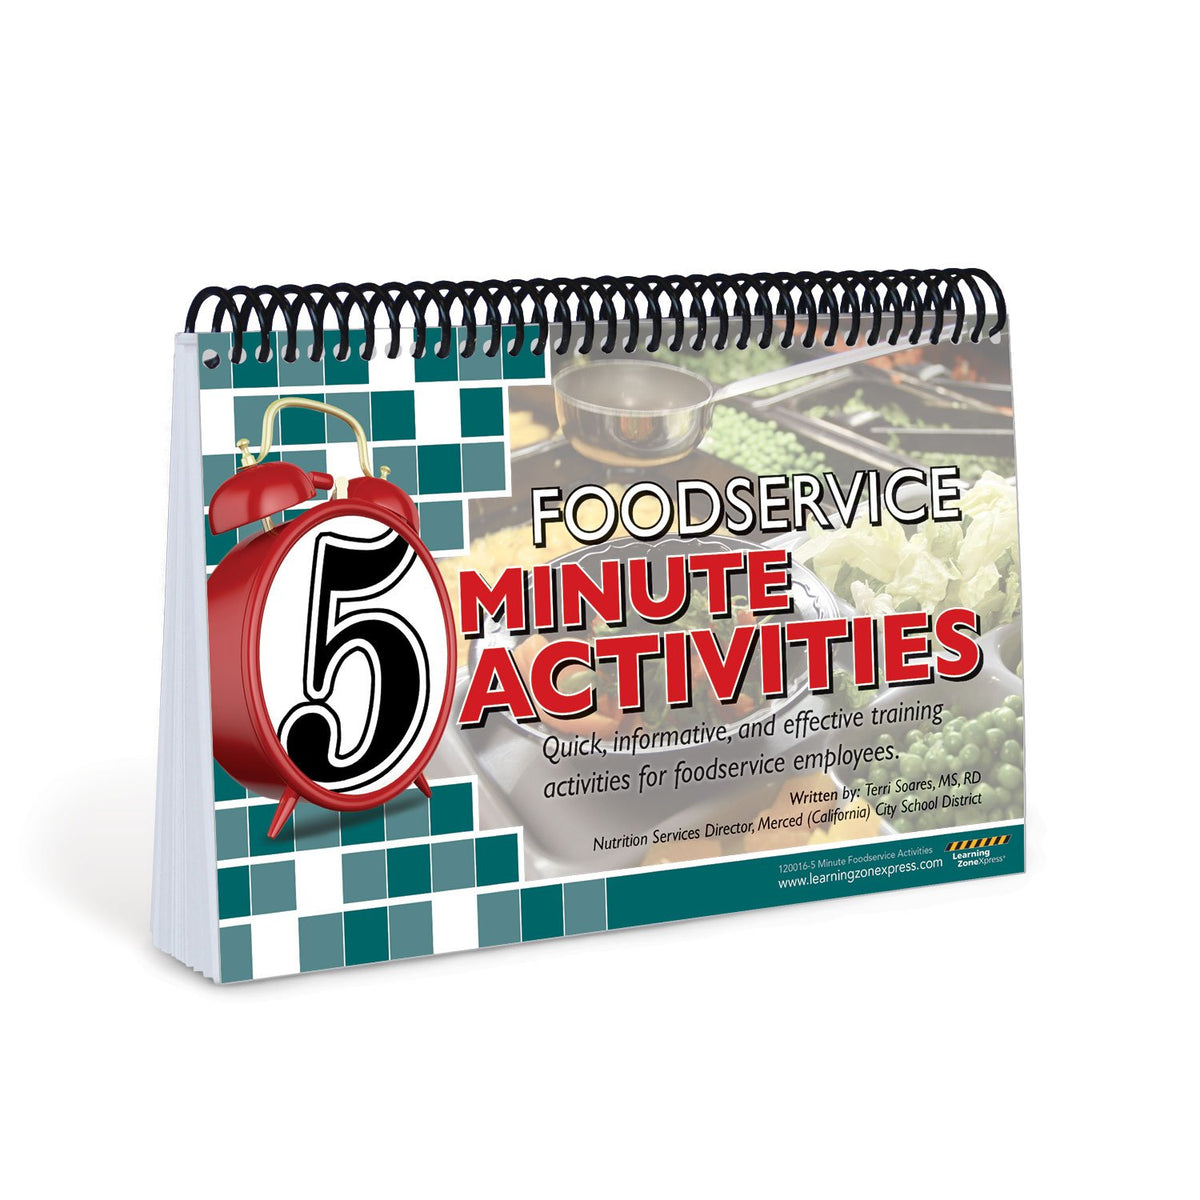 5 Minute Foodservice Activities